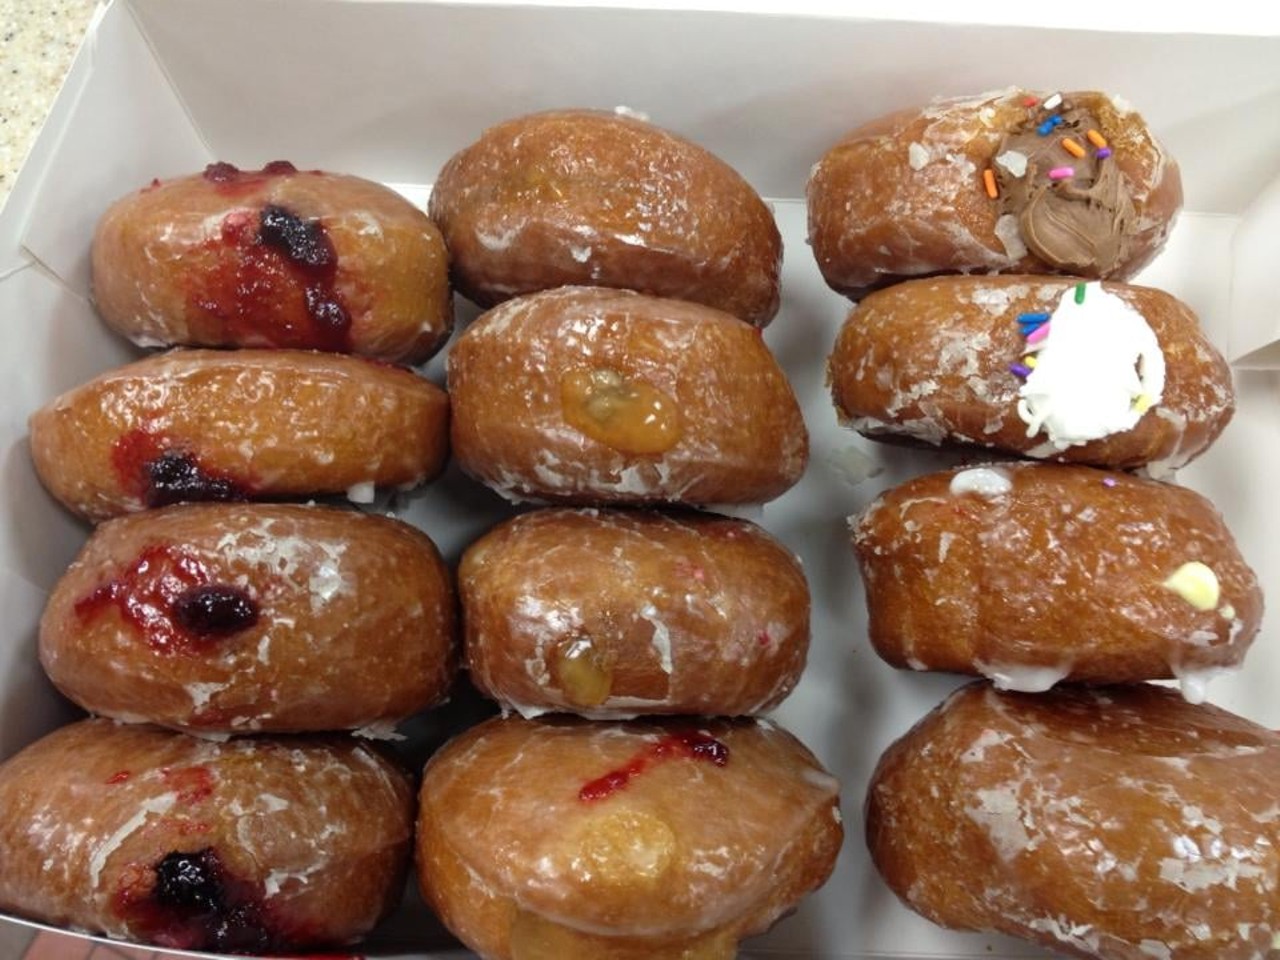  Knapps Donuts
Location: 500 N Main St, Rochester
Hours:  Mon- Fri 3:30 am- 7pm, Sat 4am-5pm, Sun 4am-3pm